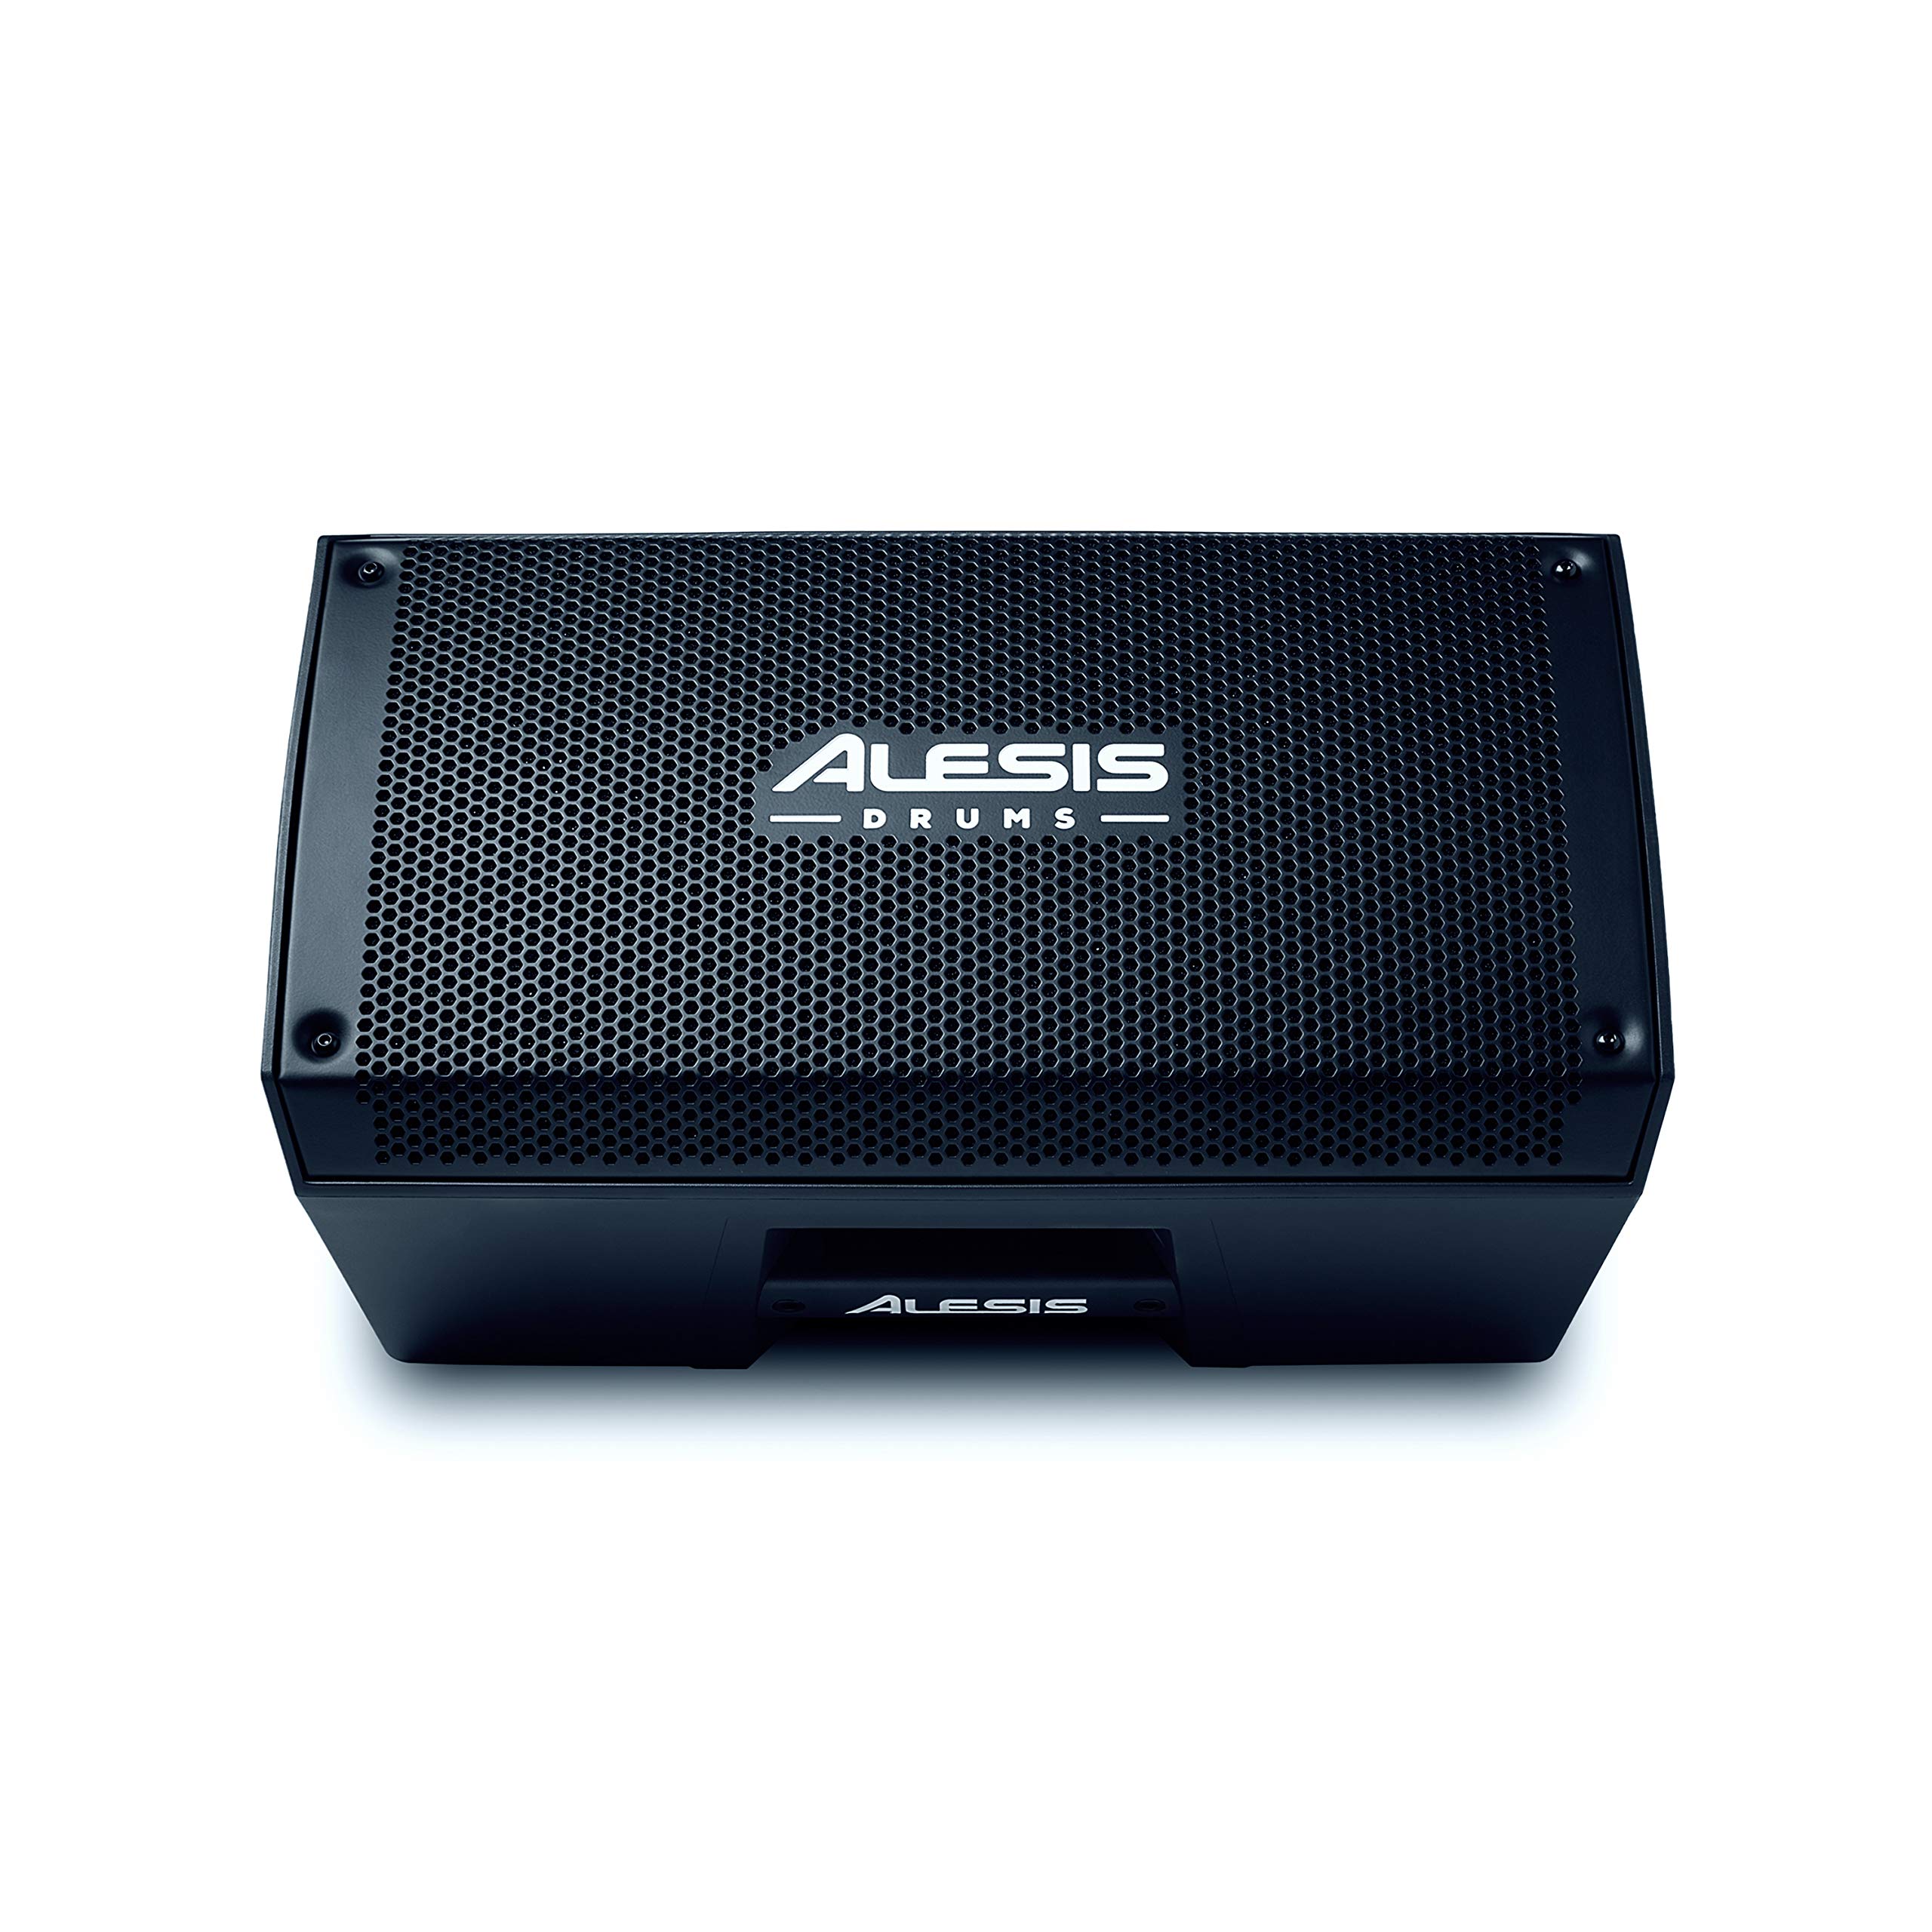 Alesis 打击放大器 8 |适用于带 8 英寸低音扬声器的电子鼓套件的 2000 瓦便携式扬声器/放大器